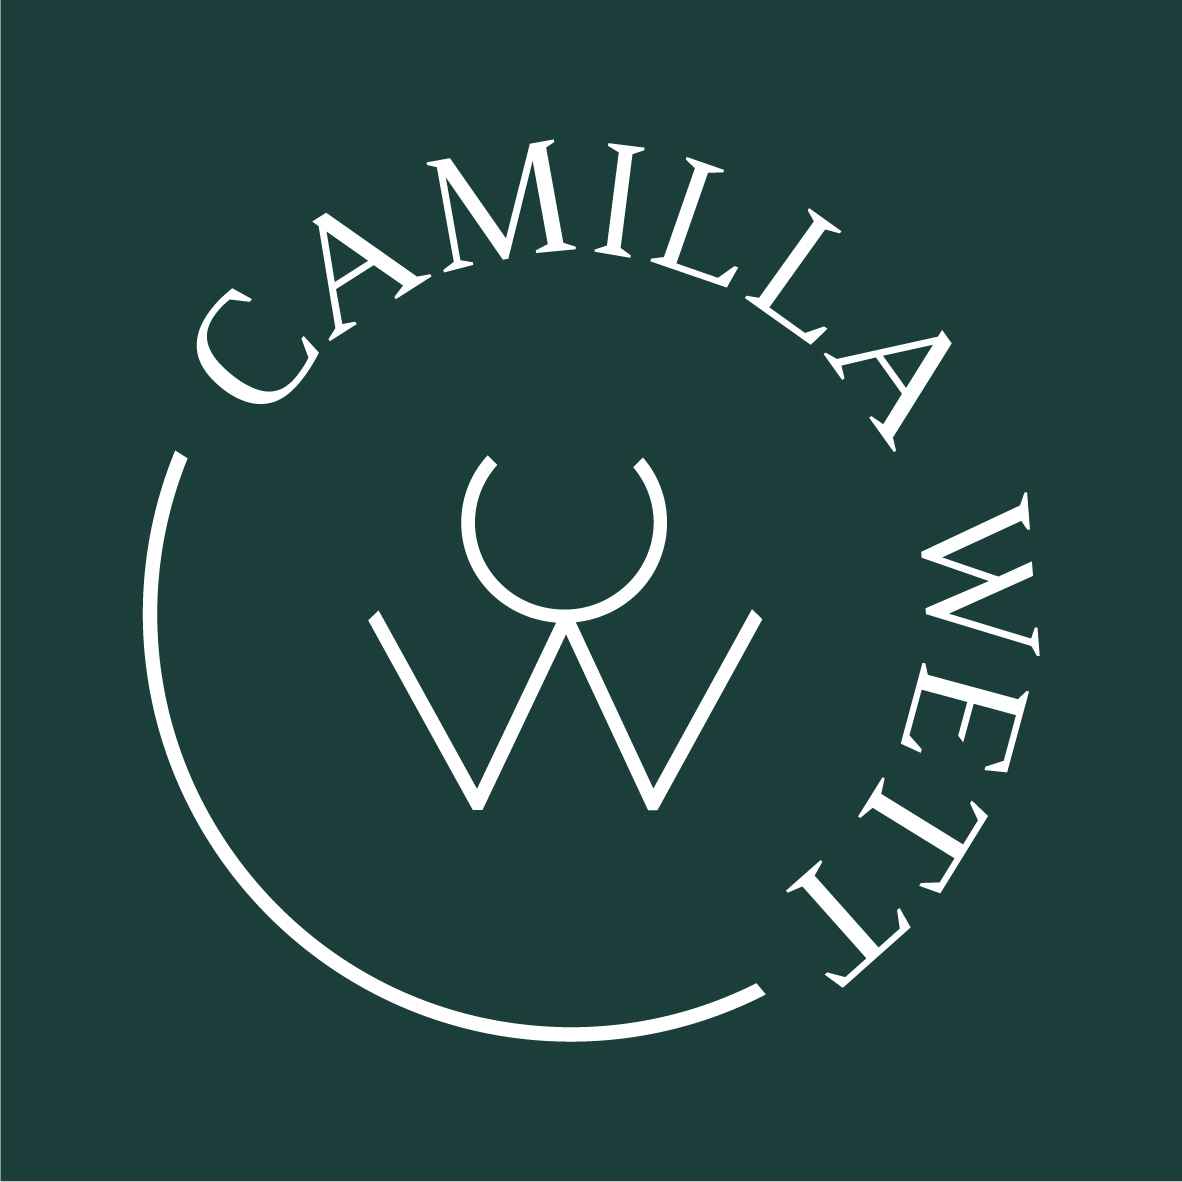 Camilla Wett Coaching logo